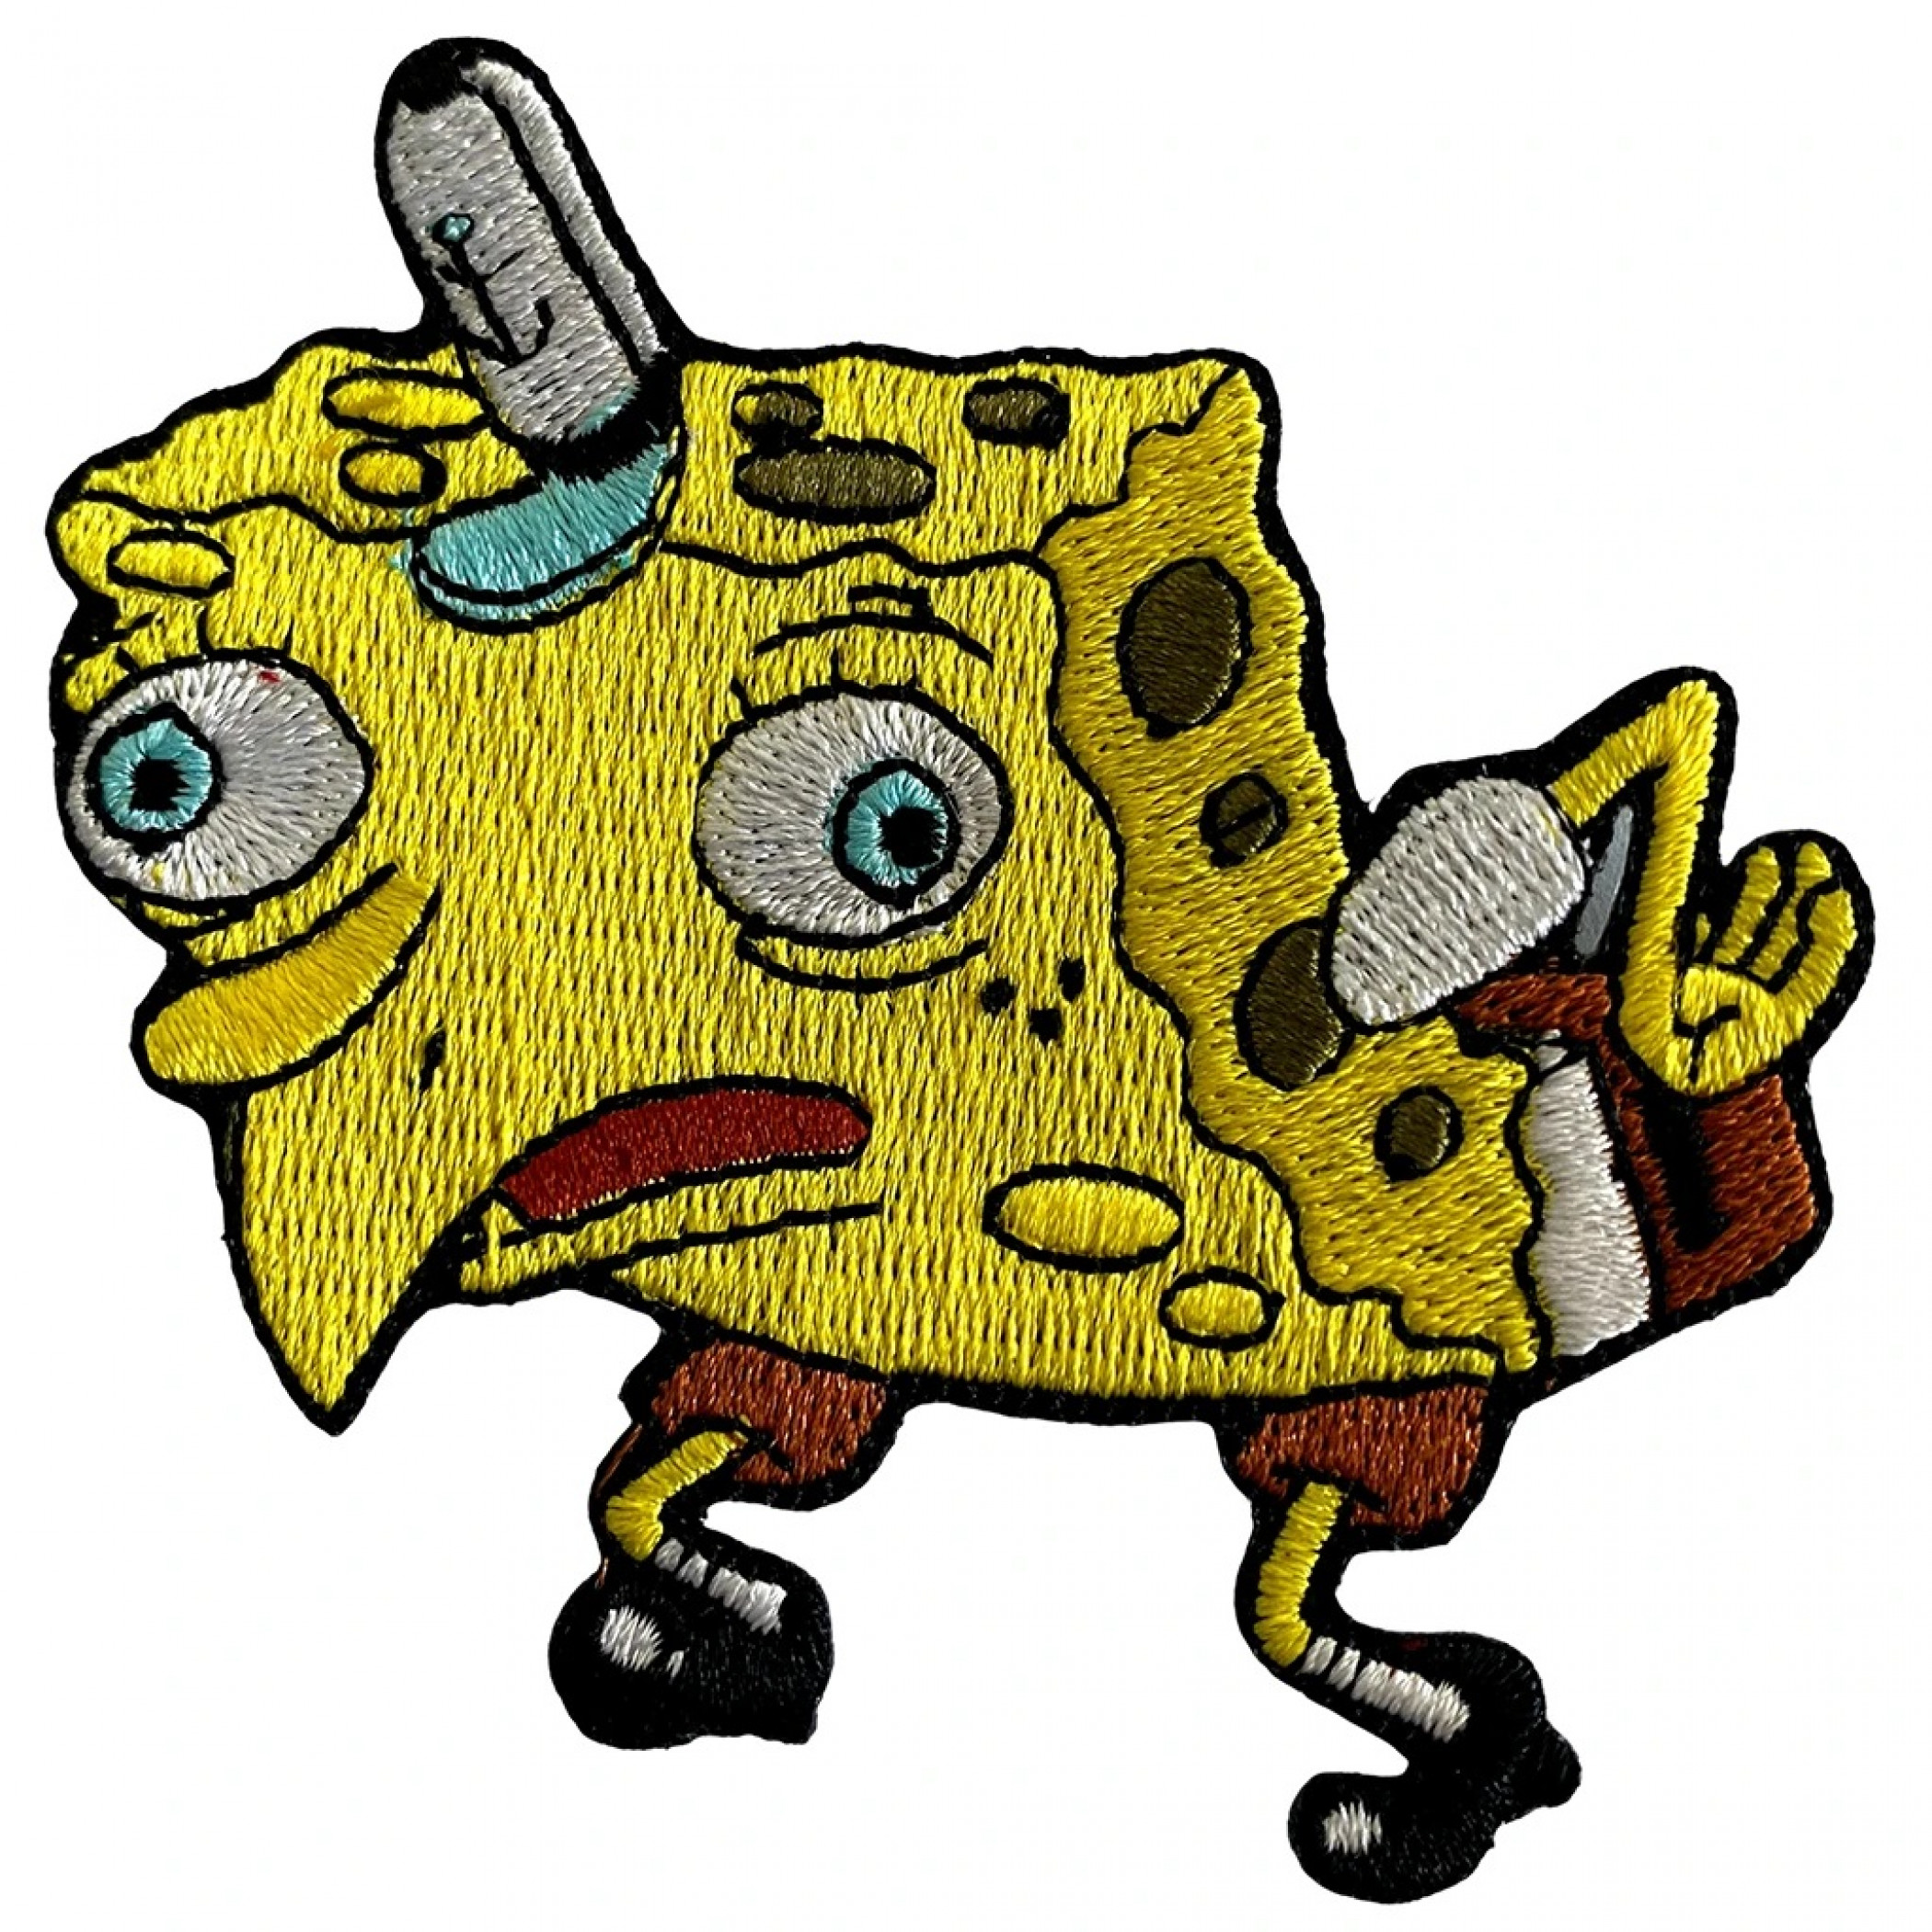 SpongeBob SquarePants memes